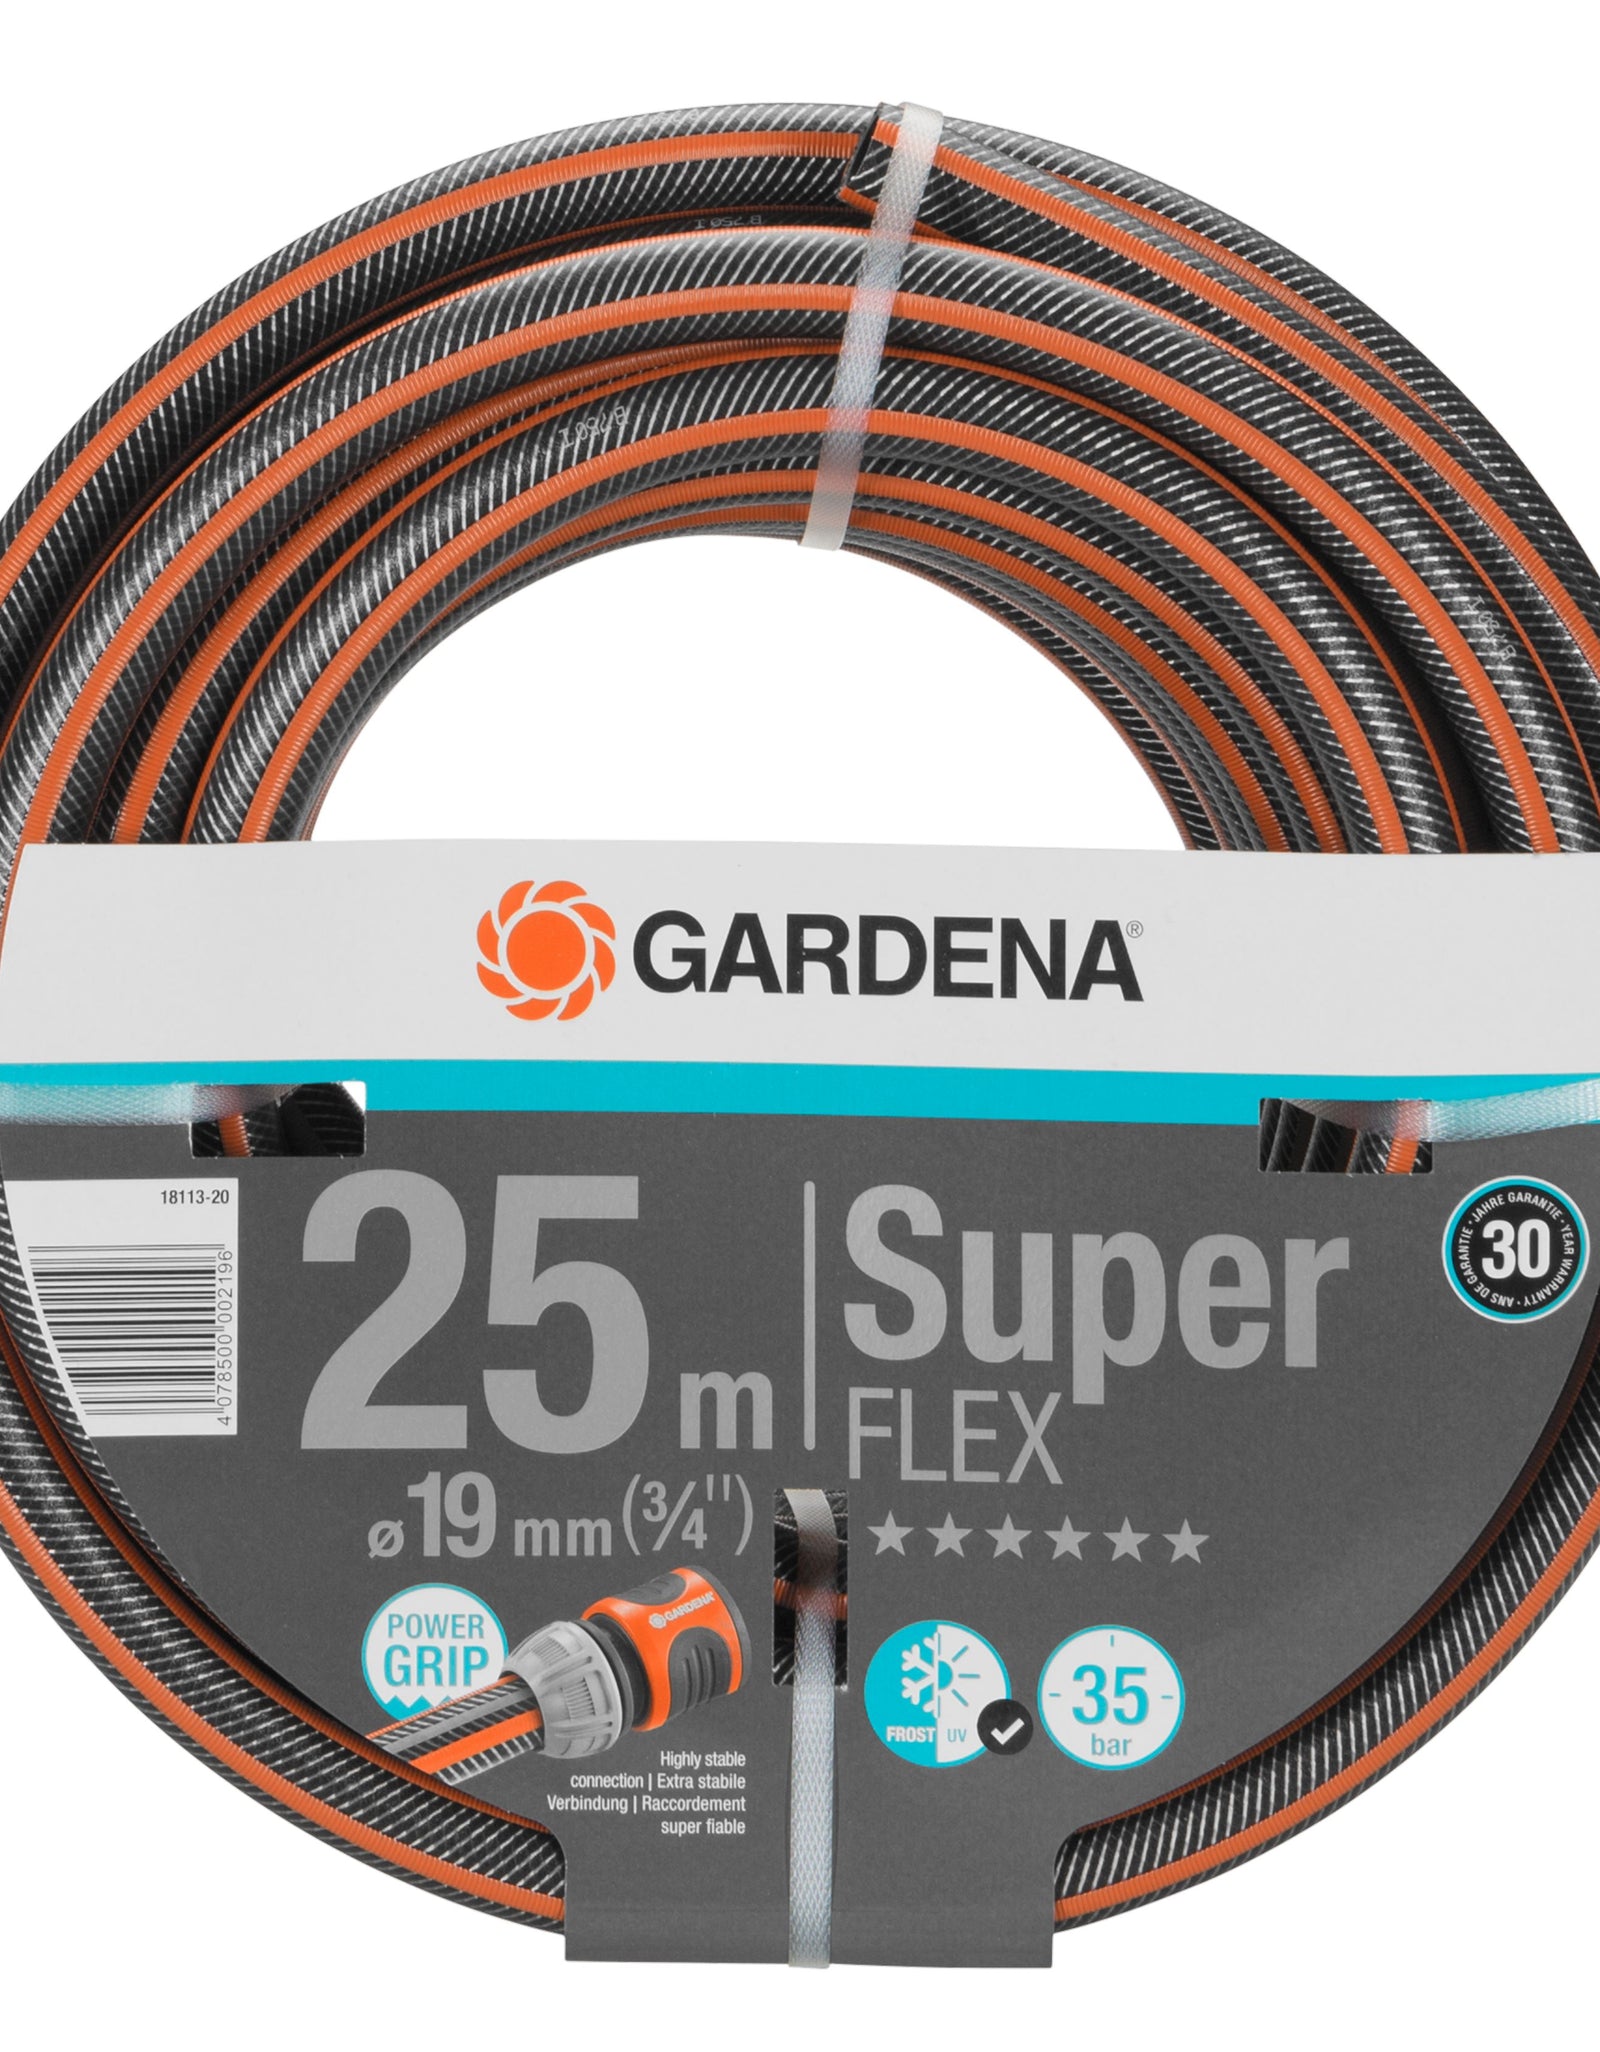 GARDENA Premium SuperFLEX Hose 19mm  (3/4") x 25m